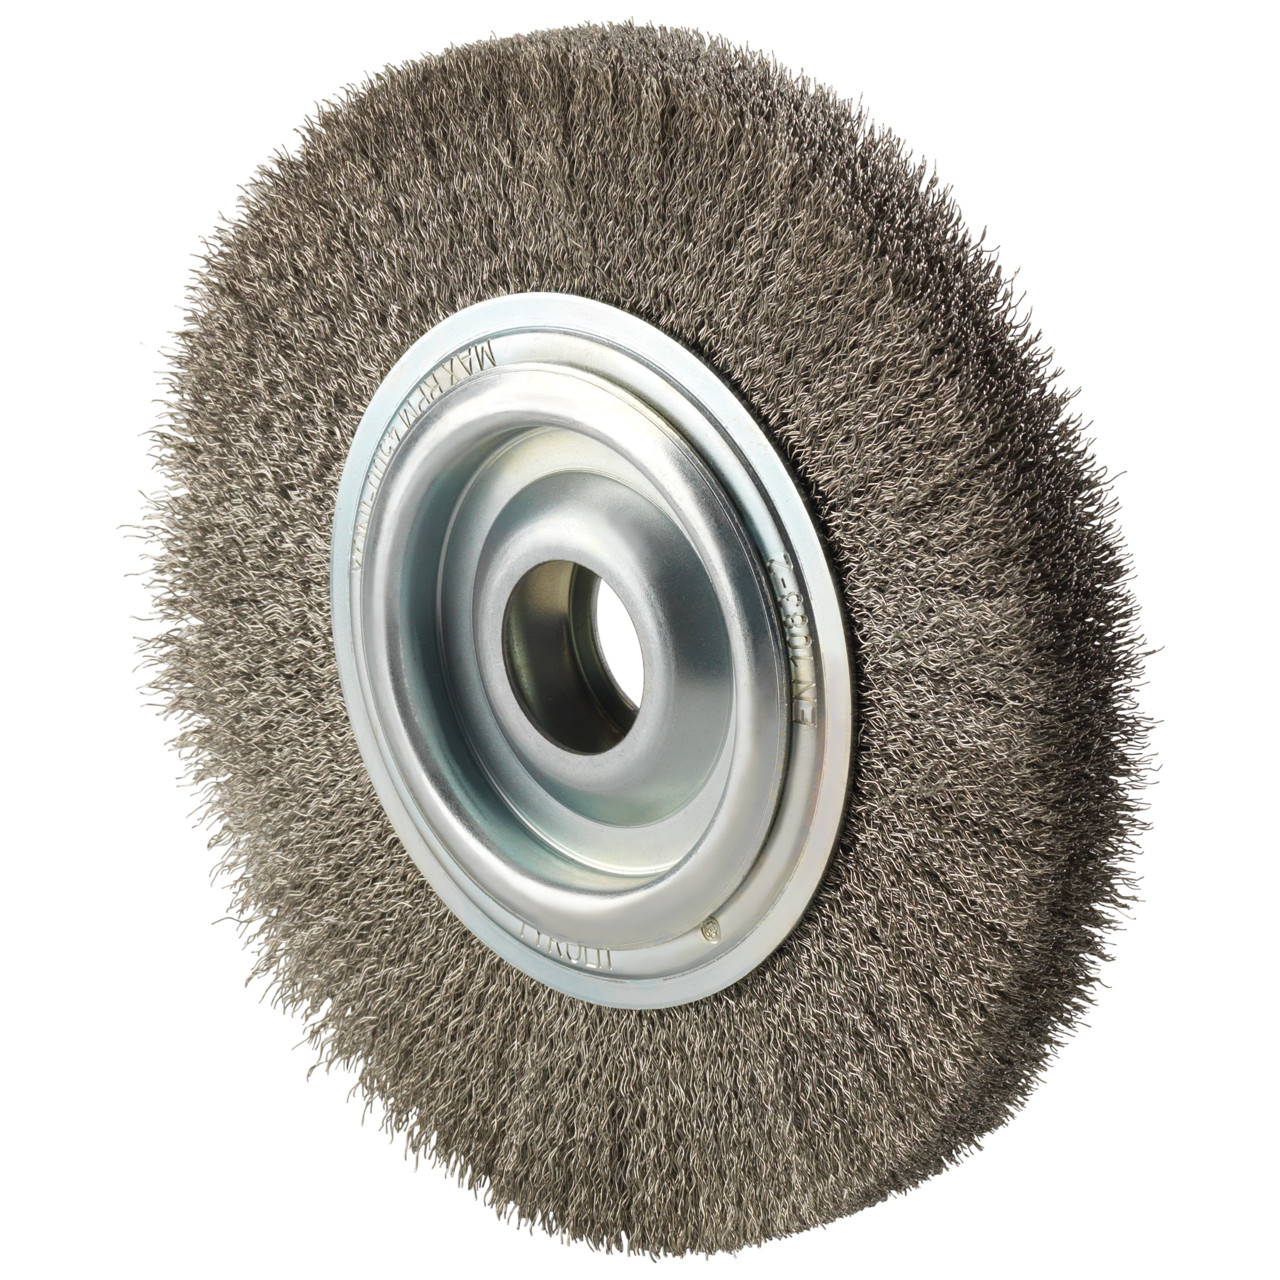 Spazzole rotonde Tyrolit DxLxH 200x36x40x32 Per acciaio inox, forma: 1RDW - (spazzole rotonde), Art. 896122